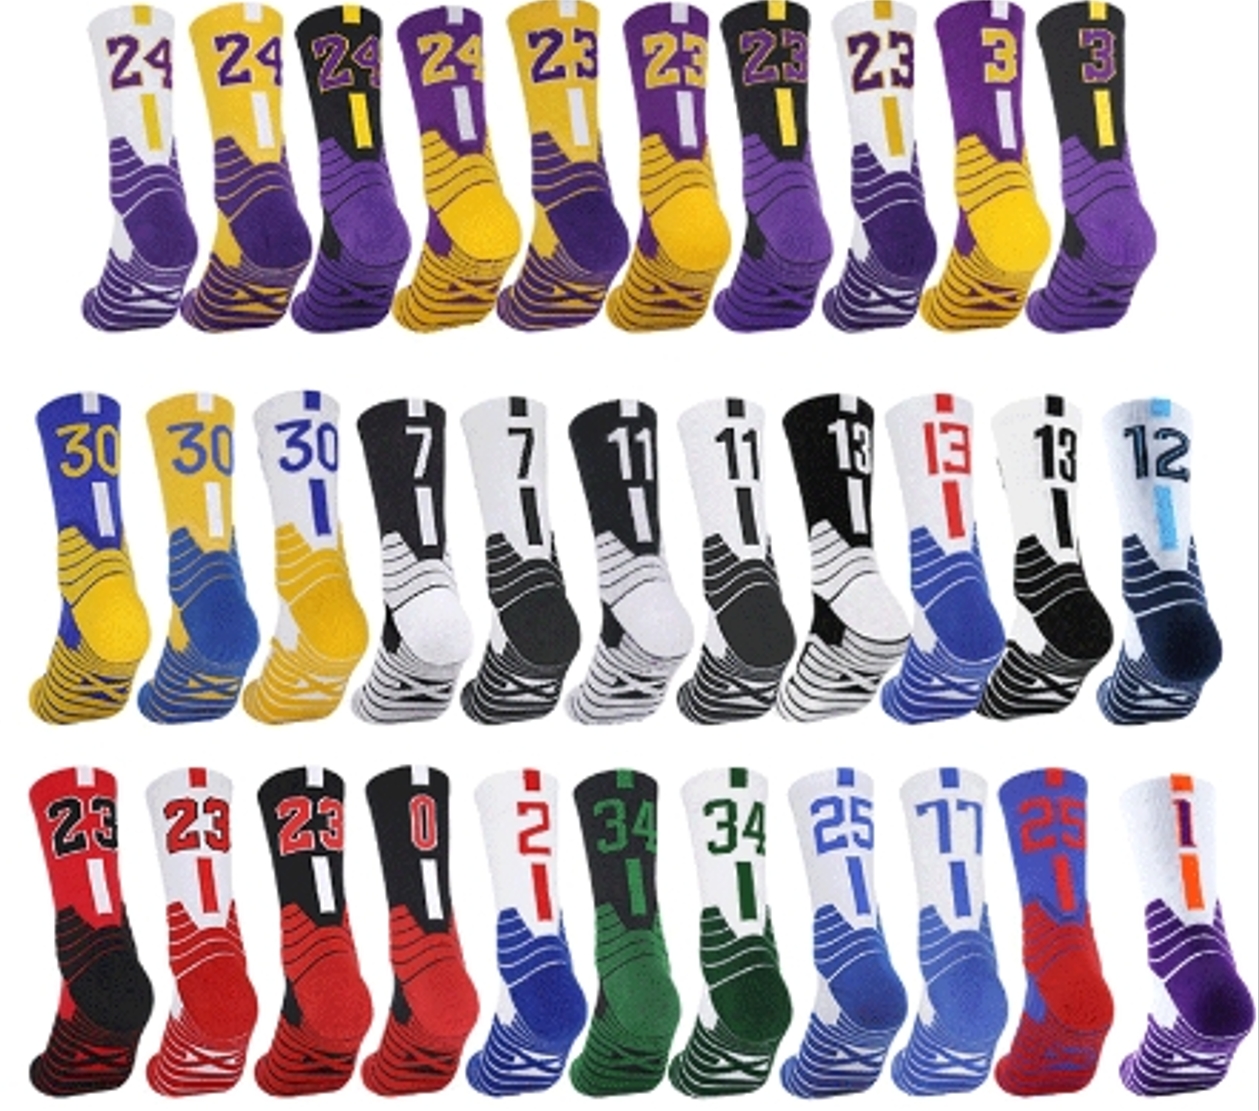 4-NBA-style-socks